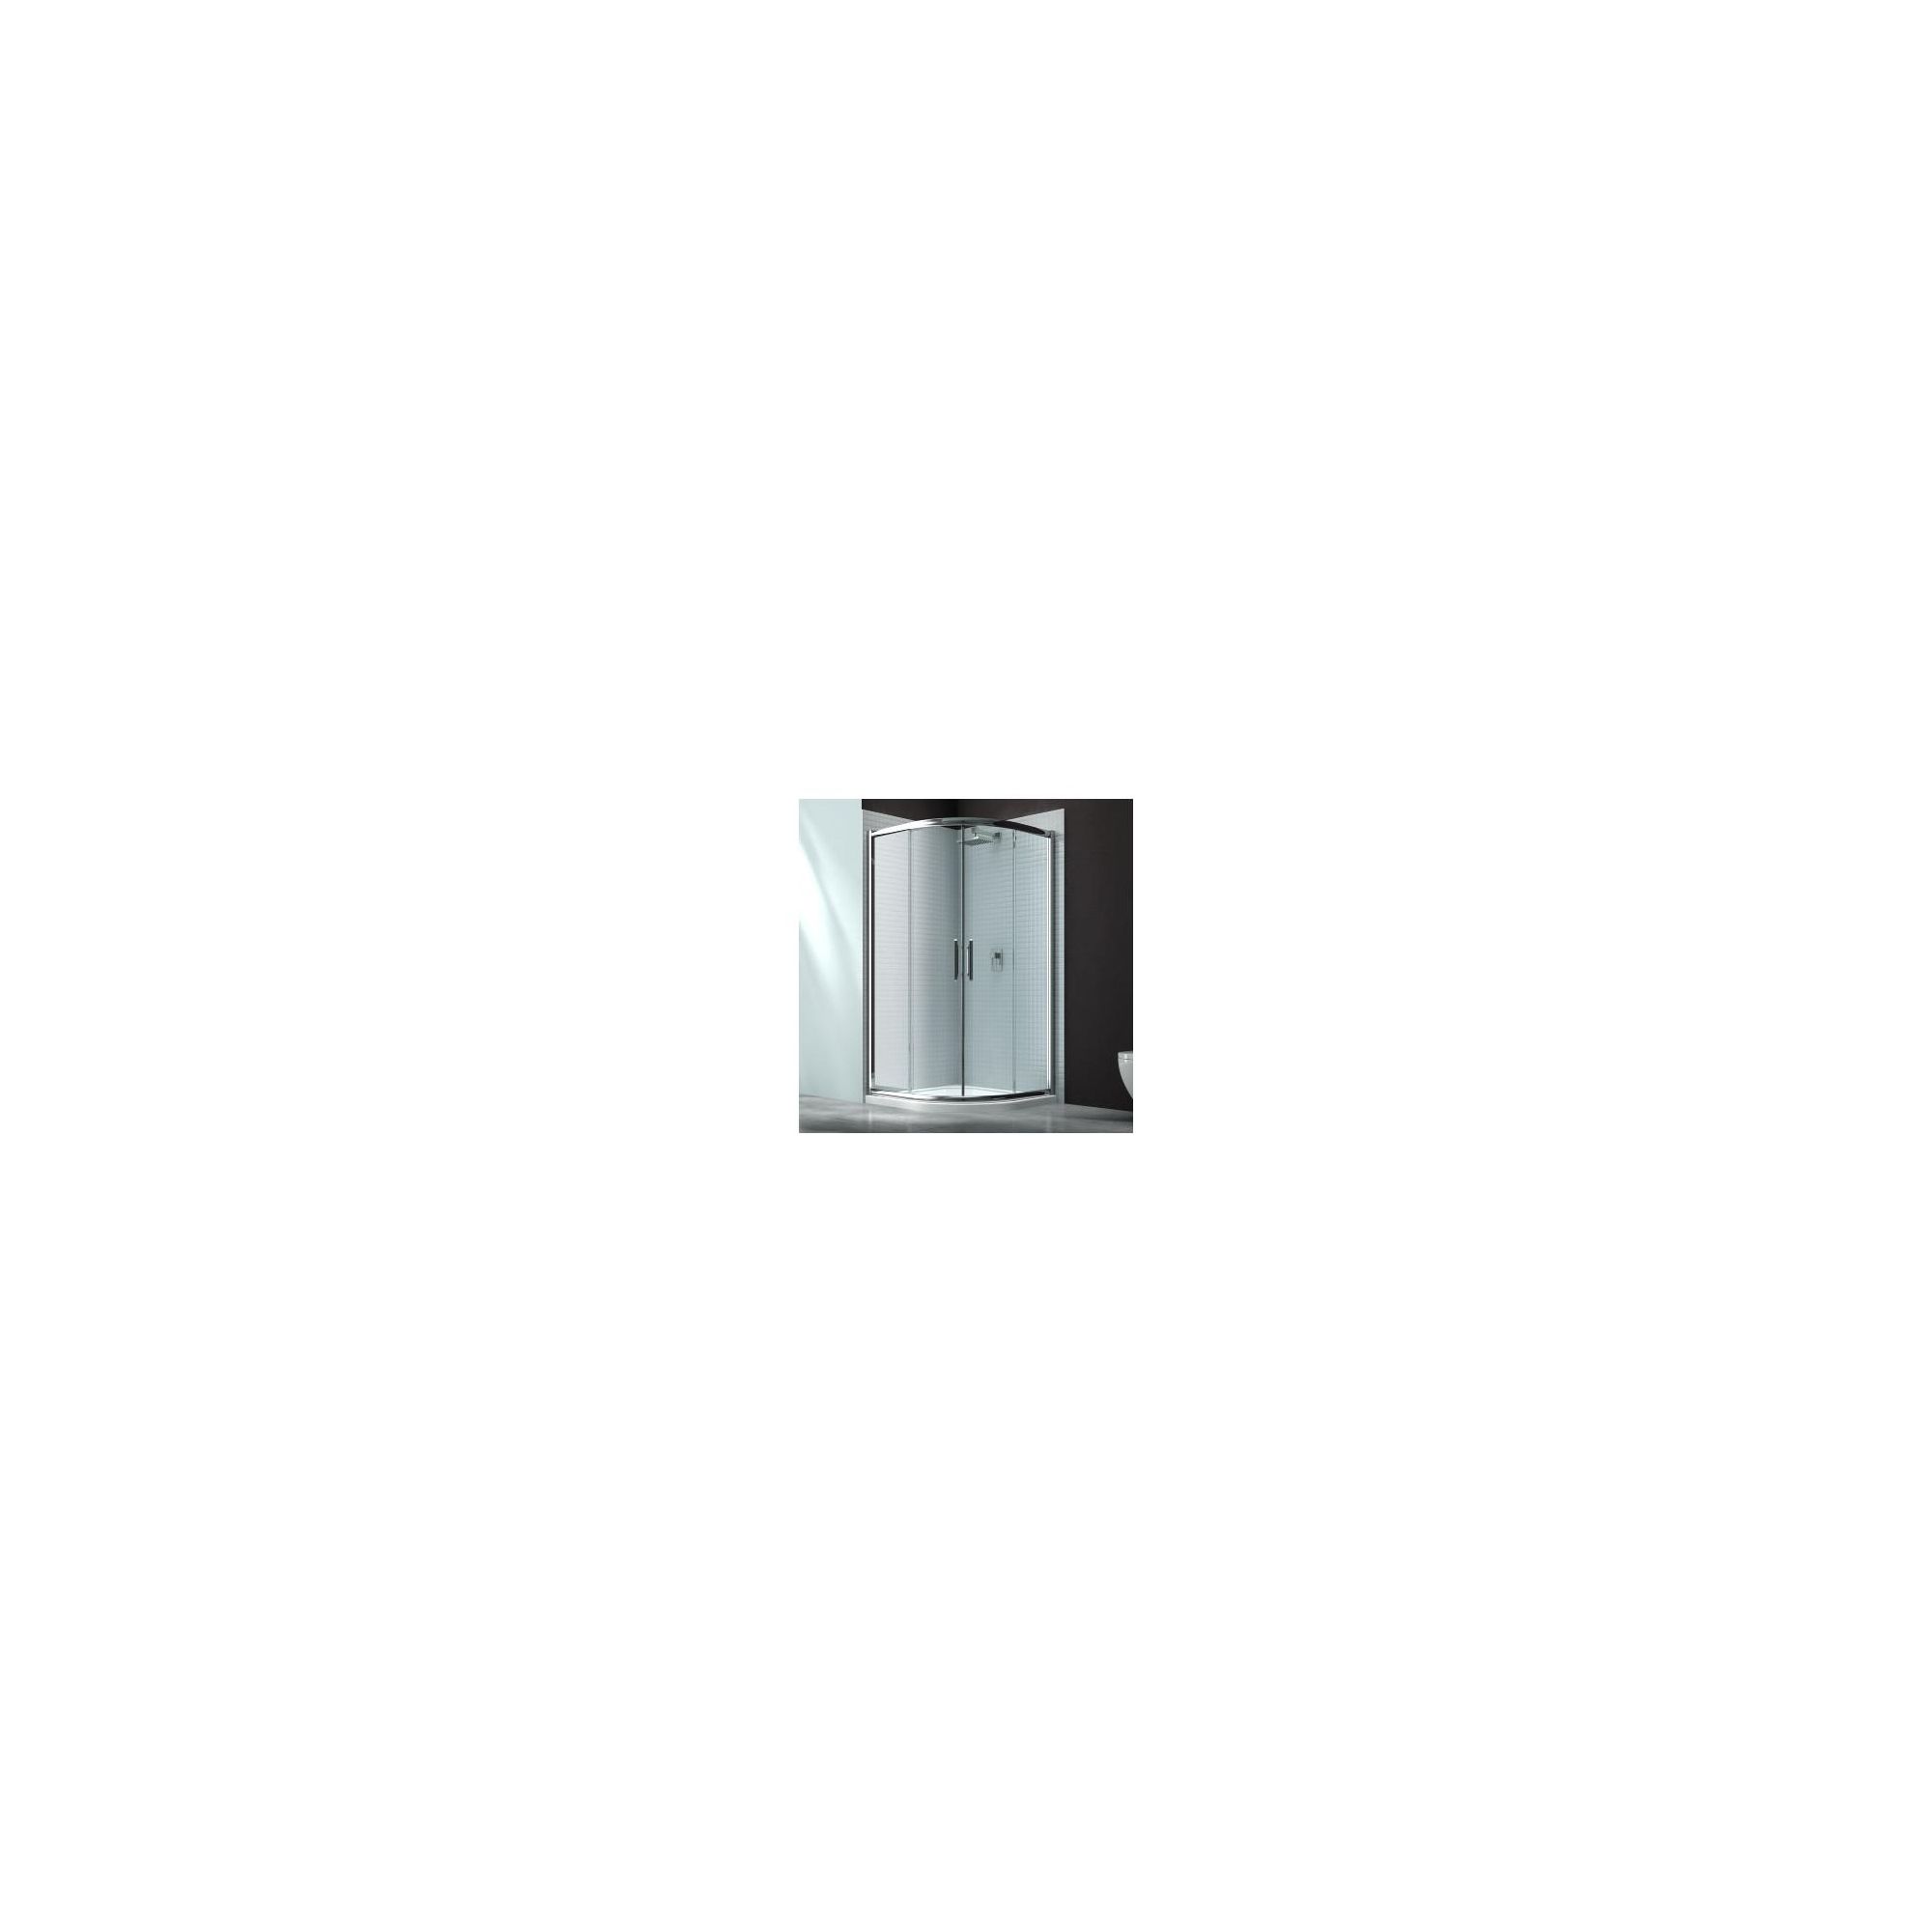 Merlyn Series 6 Double Quadrant Shower Door, 1000mm x 1000mm, Chrome Frame, 6mm Glass at Tesco Direct